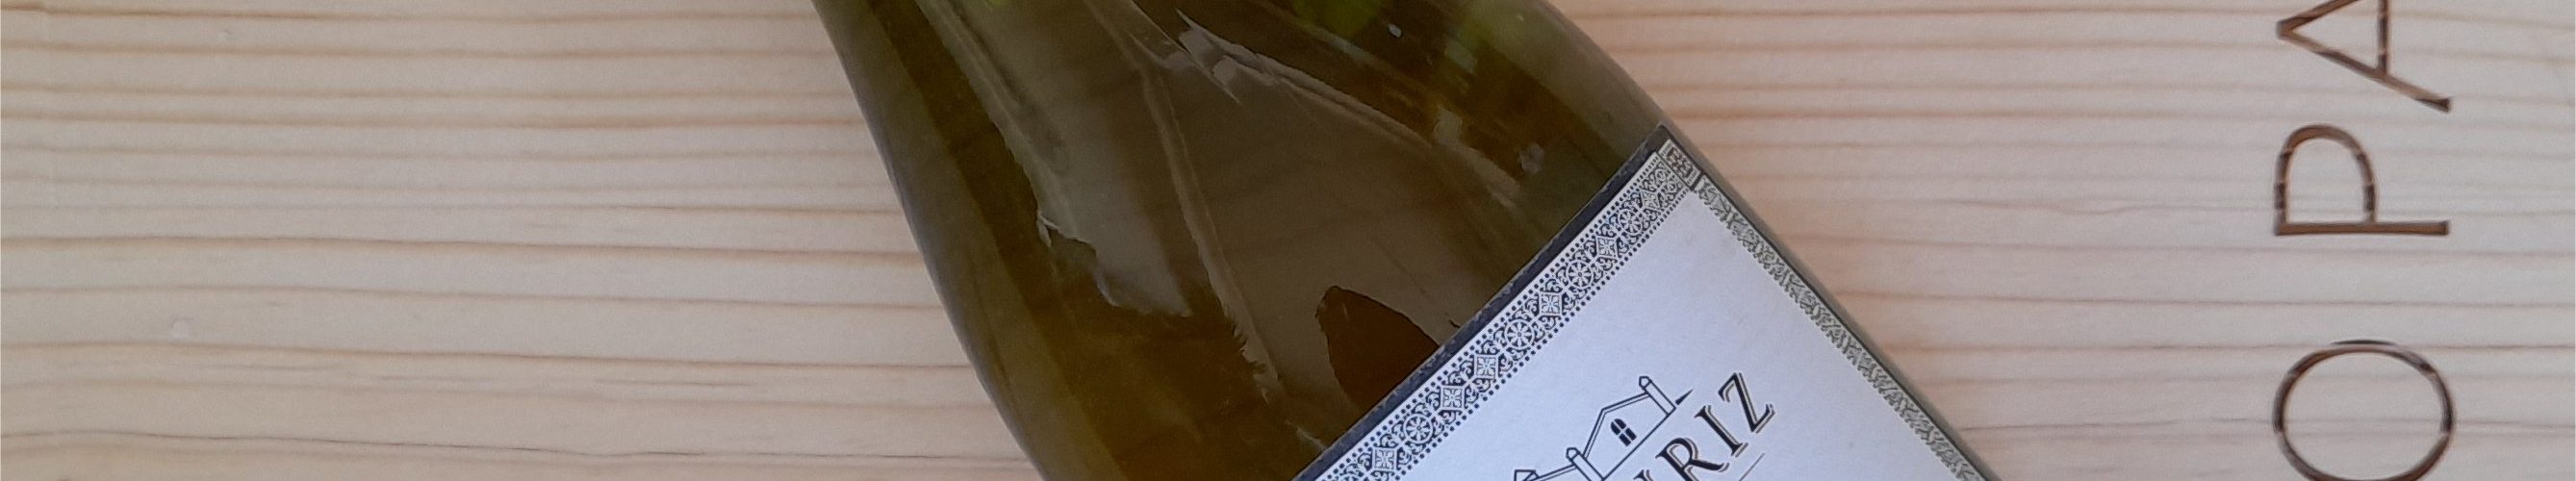 Sauvignon Blanc 2018 - Errazuriz